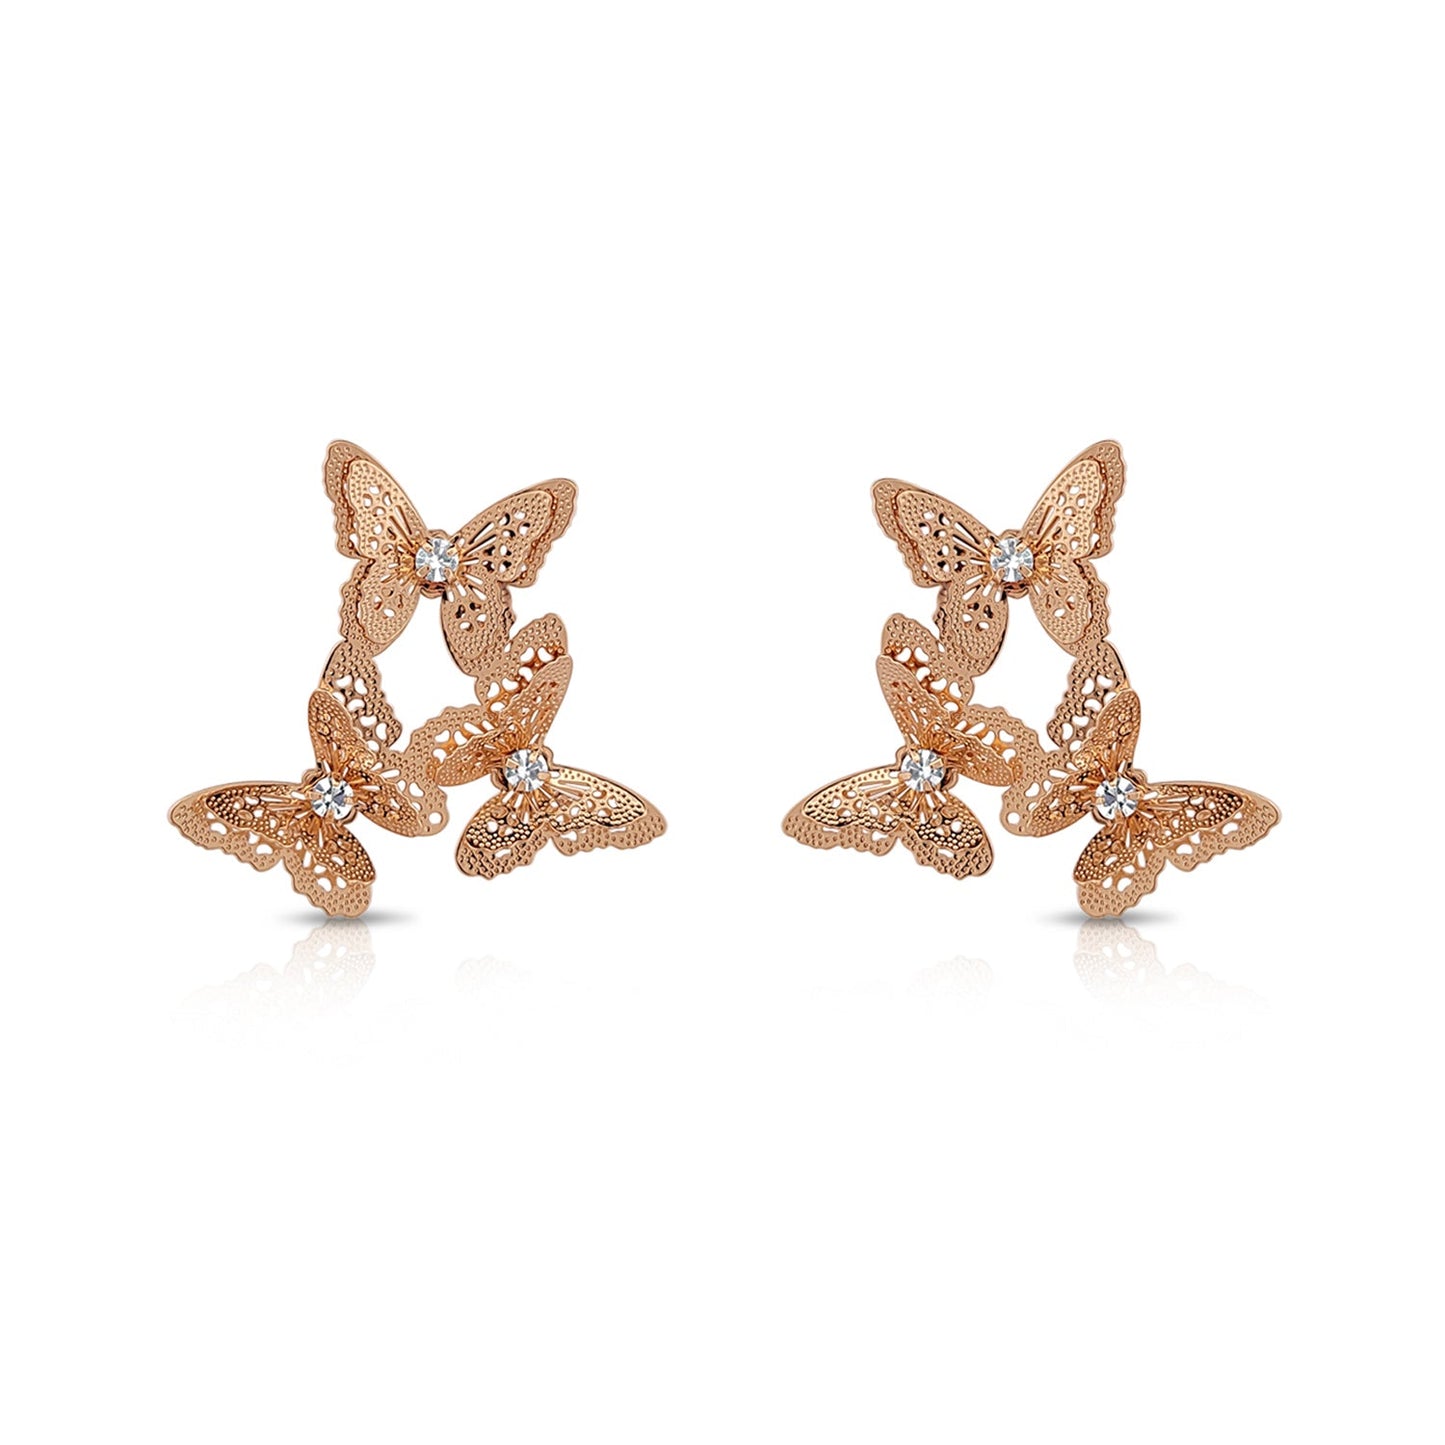 BESHEEK Goldtone 3d Butterfly and Rhinestone Dangle Stud Earrings | Handmade Hypoallergenic Boho Beach Gala Wedding Style Fashion Earrings